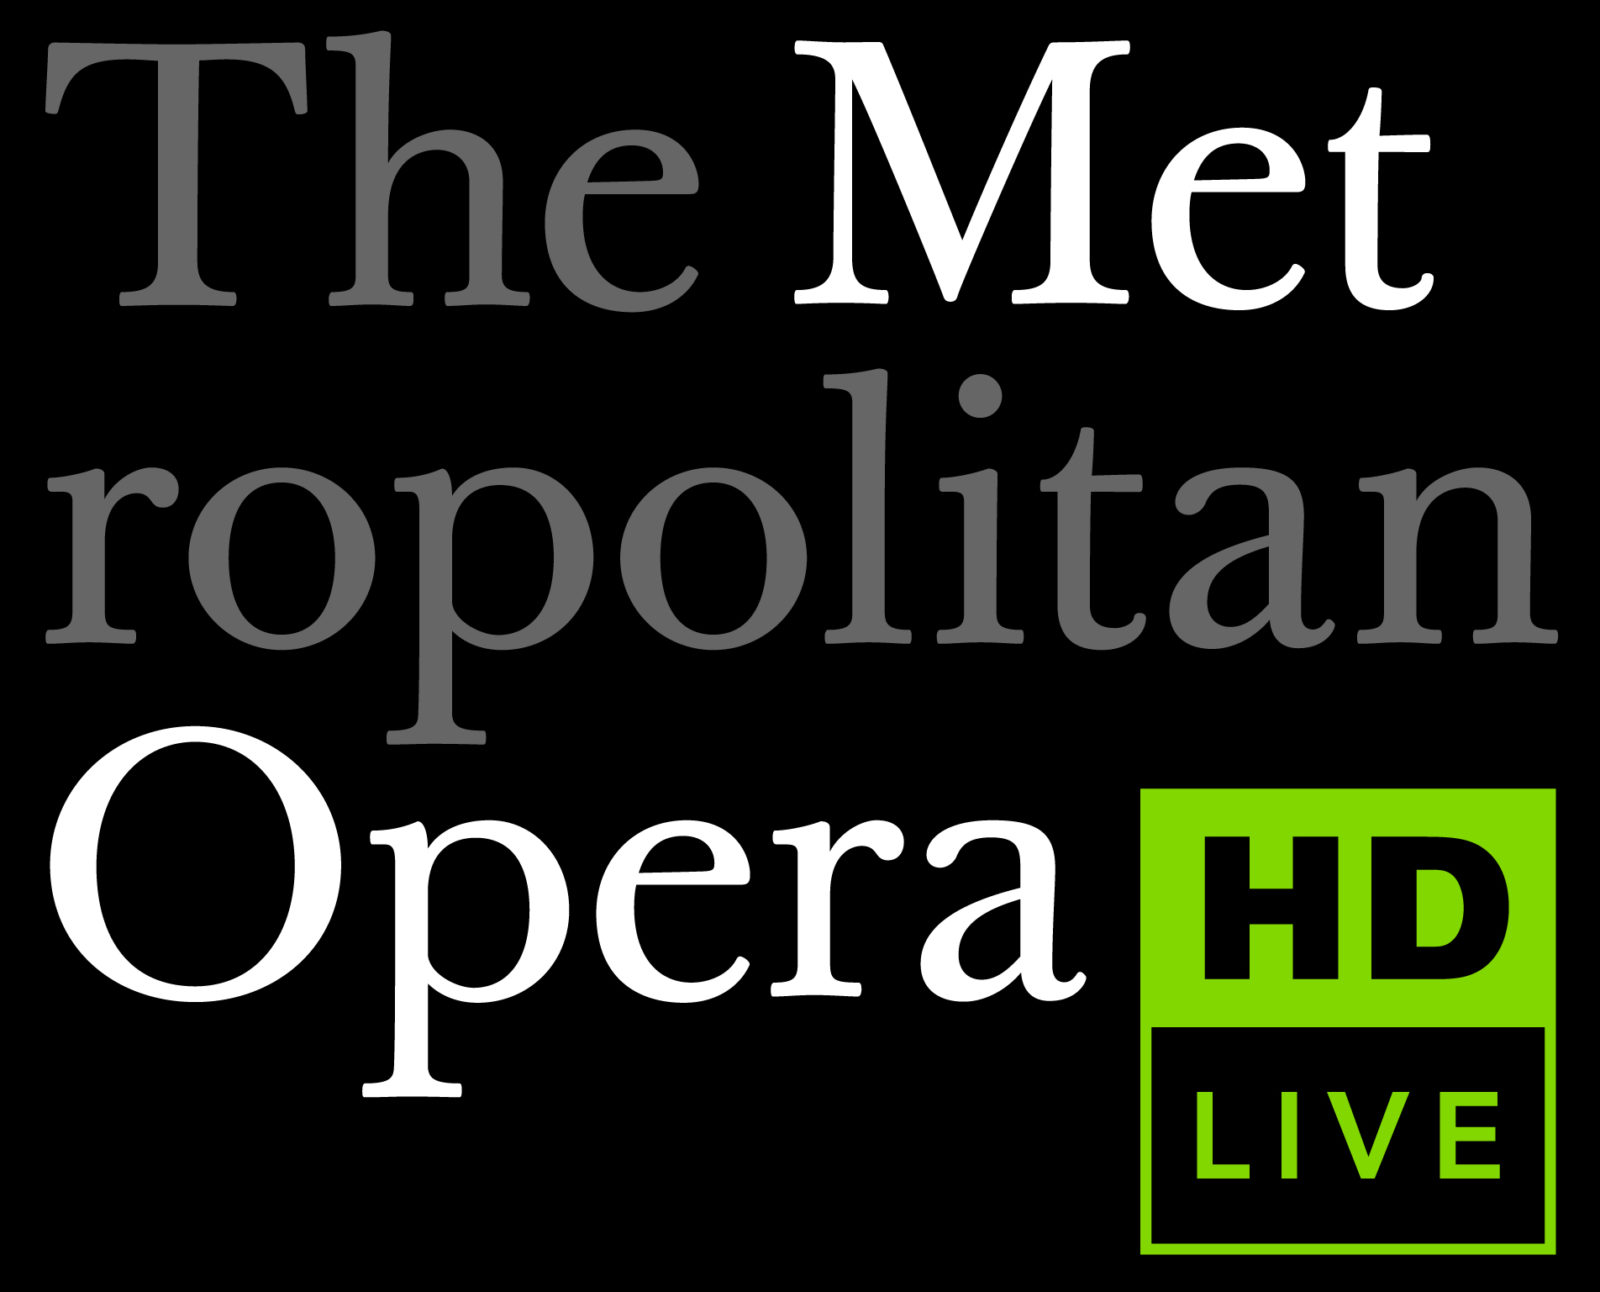 the metropolitan opera logo